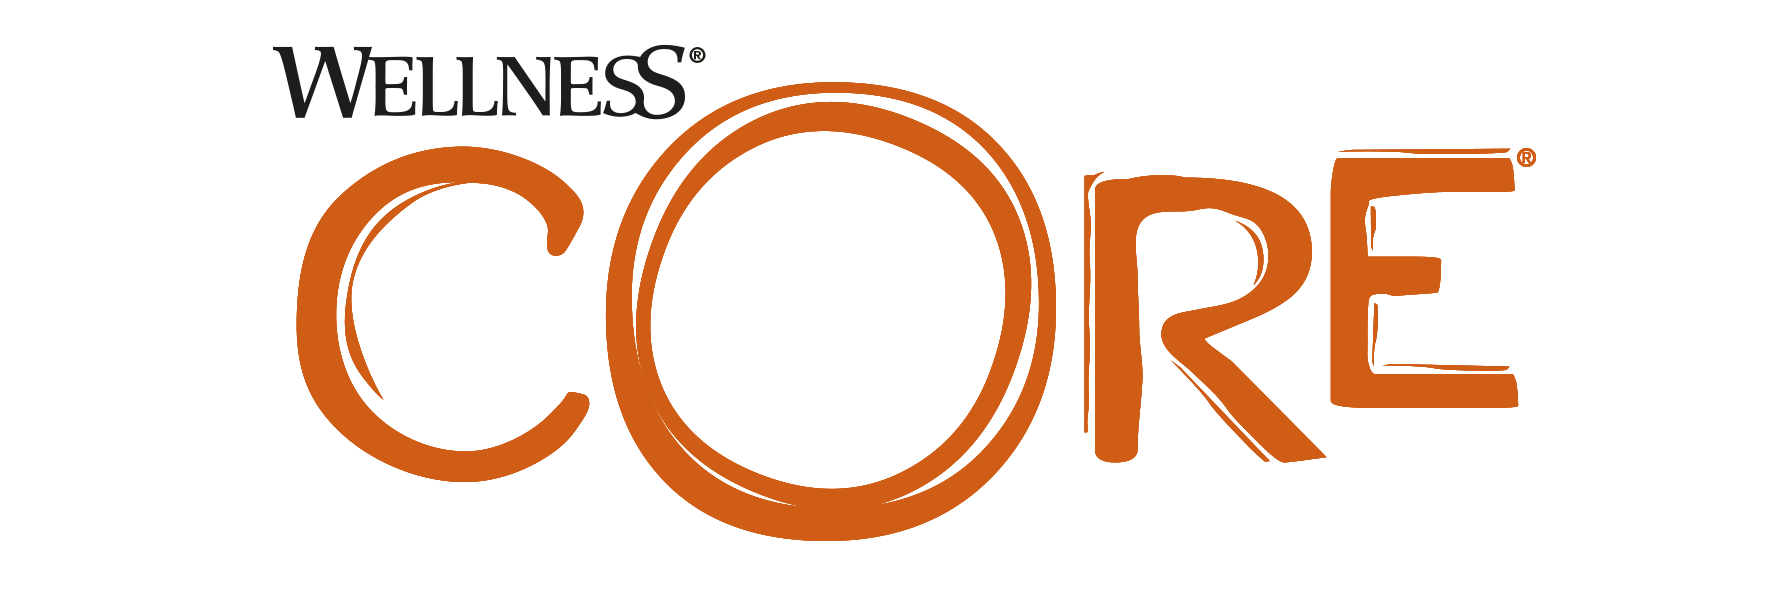 Логотип Core(Коре), Сша. Продажа серебряных украшений Core(Коре), Сша оптом и в розницу